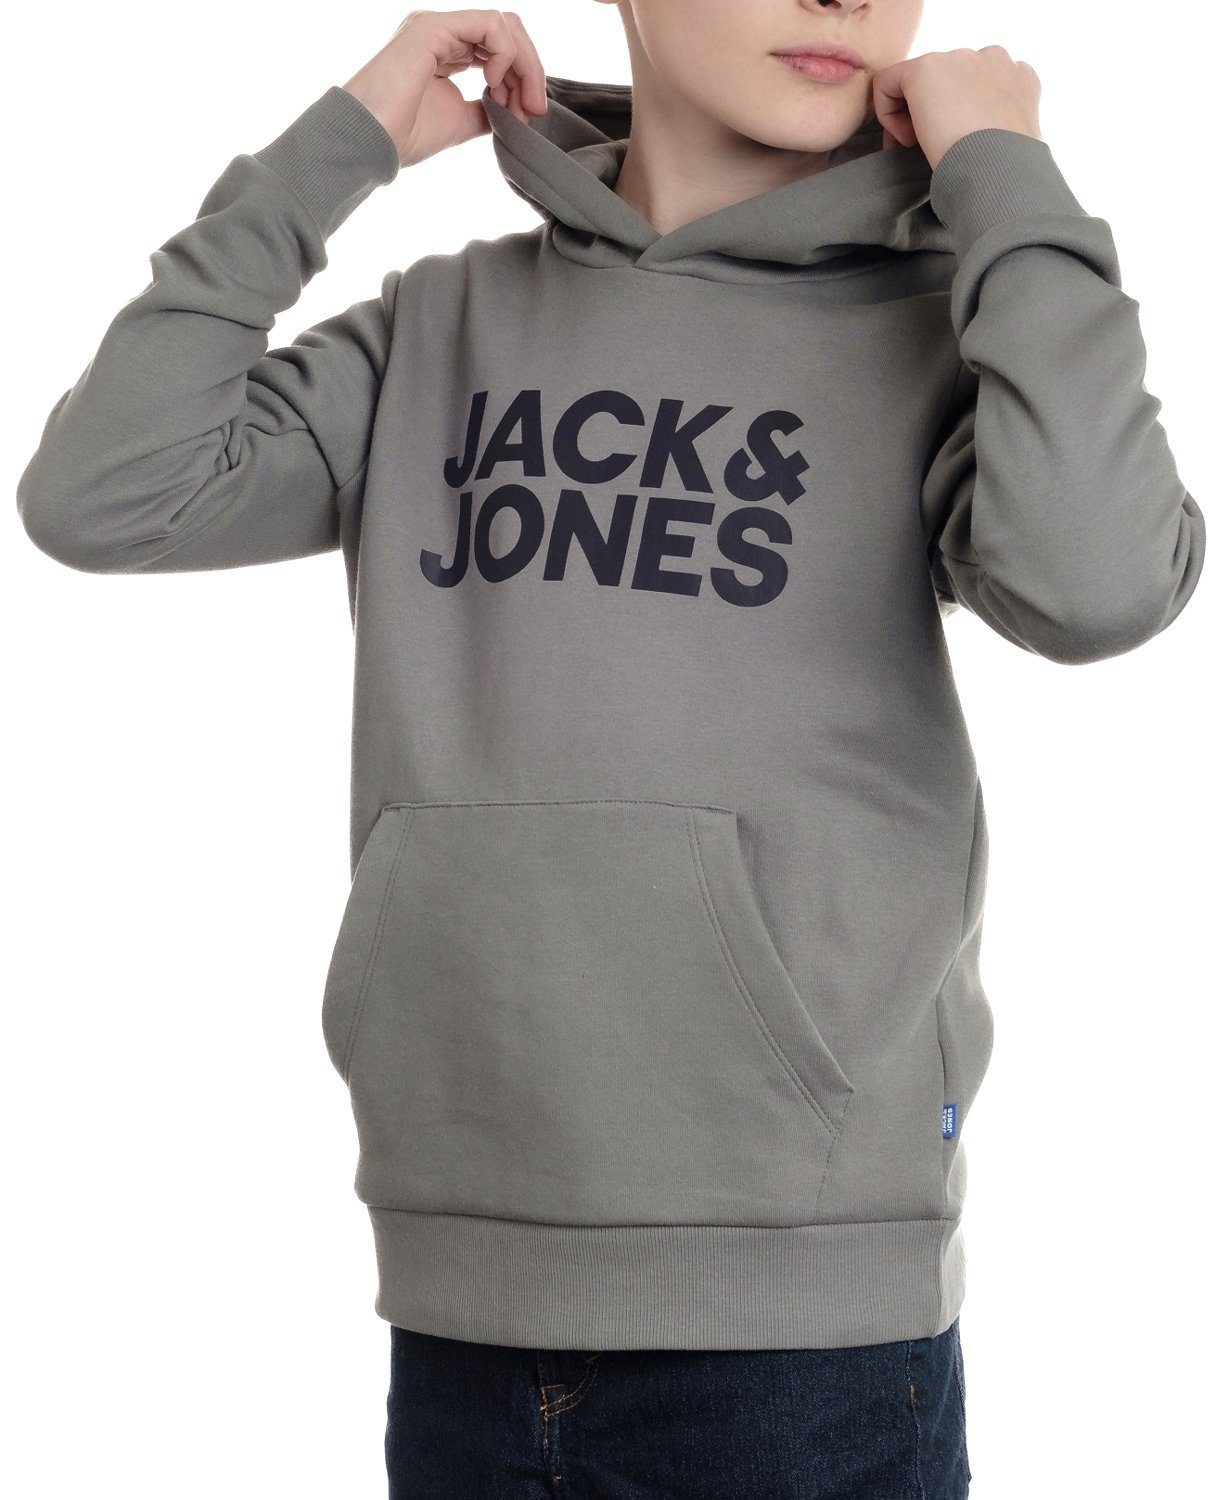 & Jones Jack Junior Sedona-Black Unifarbe Kapuzenpullover